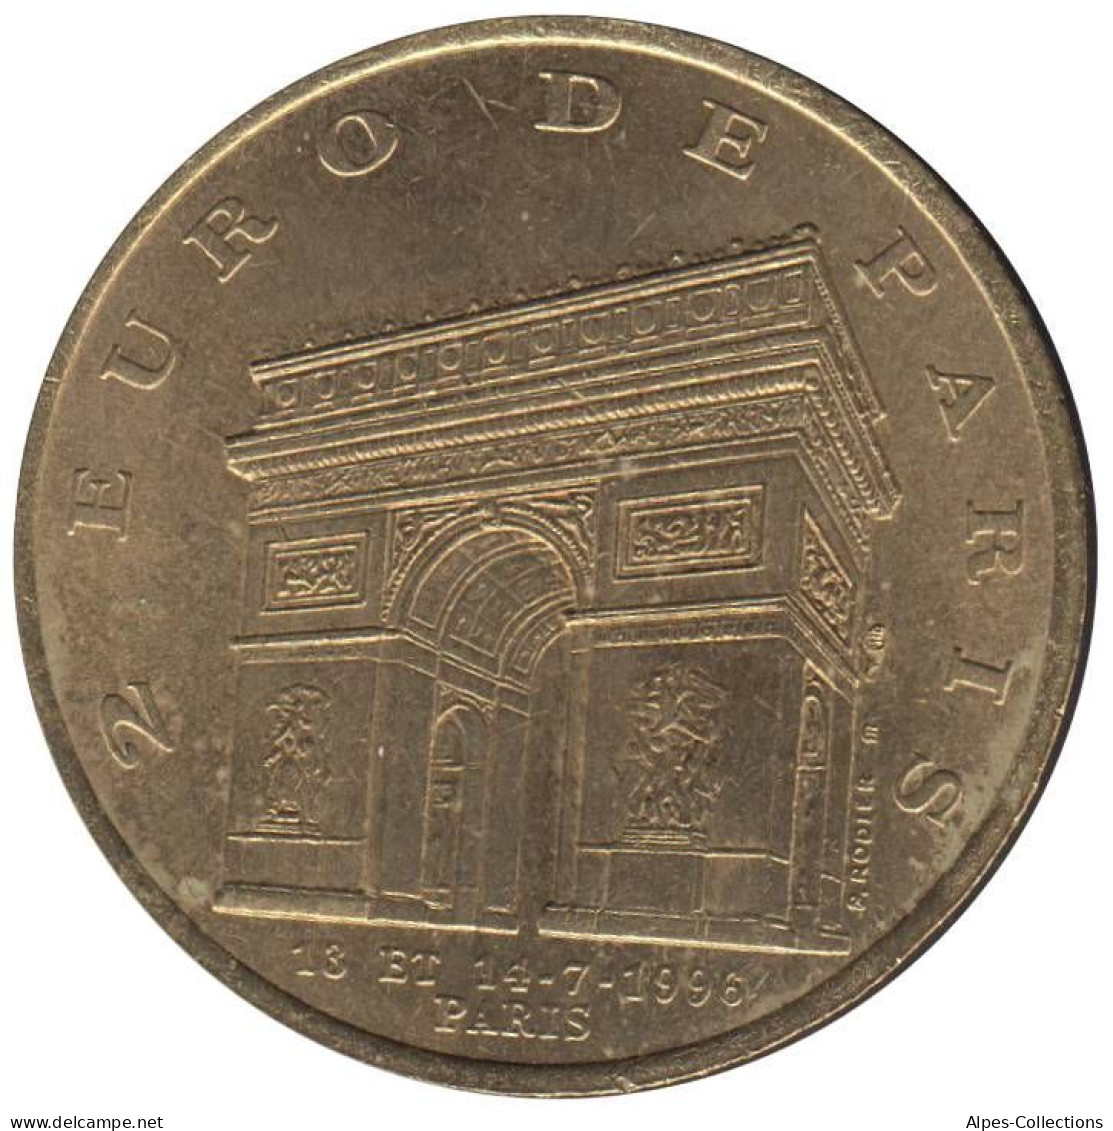 PARIS - EU0020.1 - 2 EURO DES VILLES - Réf: T194 - 1996 - Euros De Las Ciudades